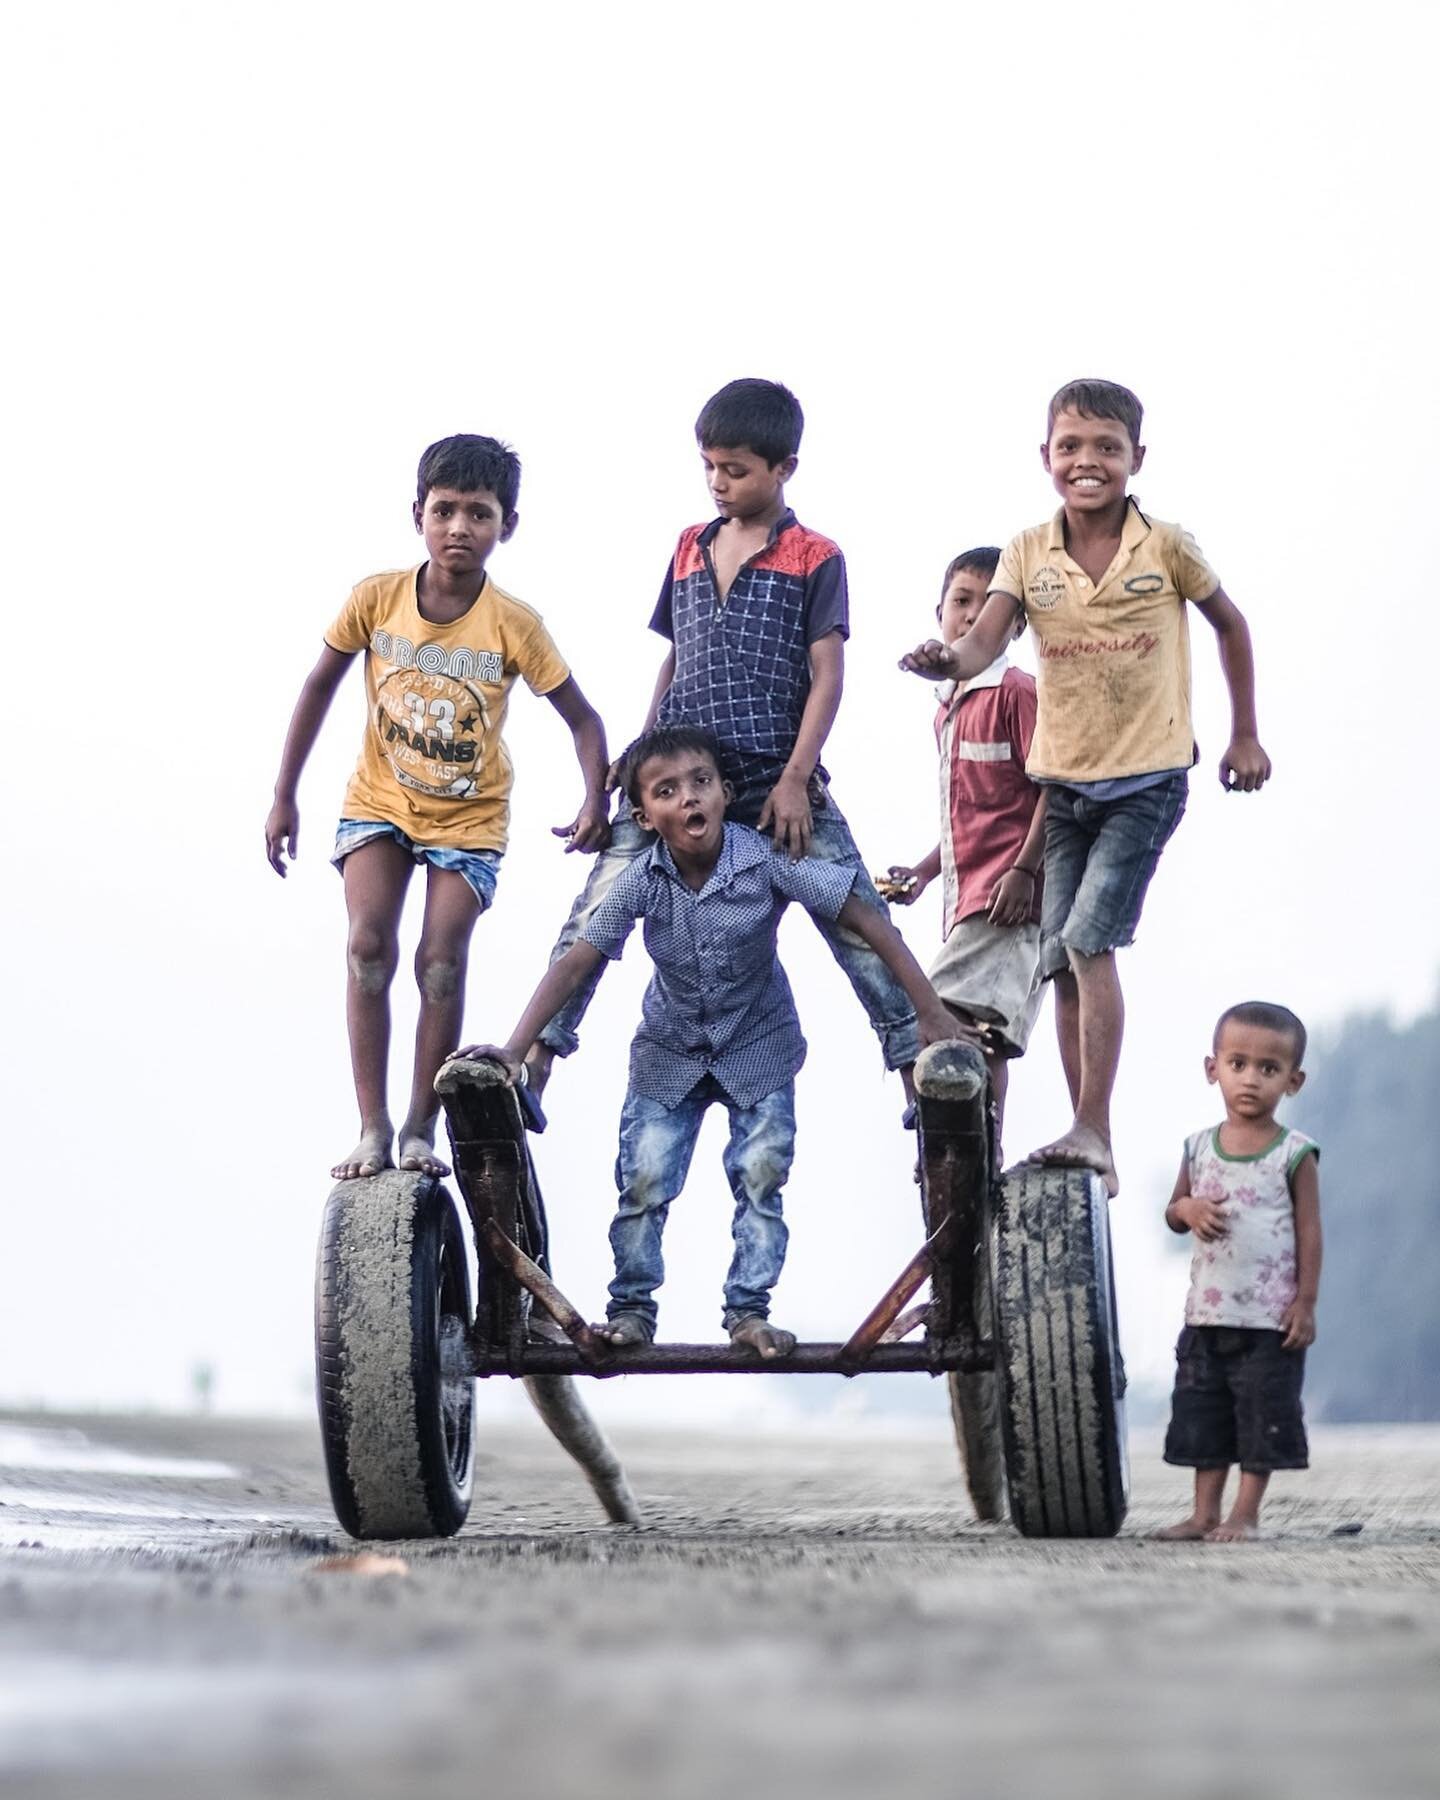 Happiness on wheels 
 
Photo by @nihab_rahman

#nihabrahman
#bangladeshstories
#humansofbangladesh
__________________
#humanitarianaid  #humaninterest
#unhcr_bgd #unicefbangladesh  #coxsbazar #aidworker #documentary  #candidchildhood #bbc #worldpress